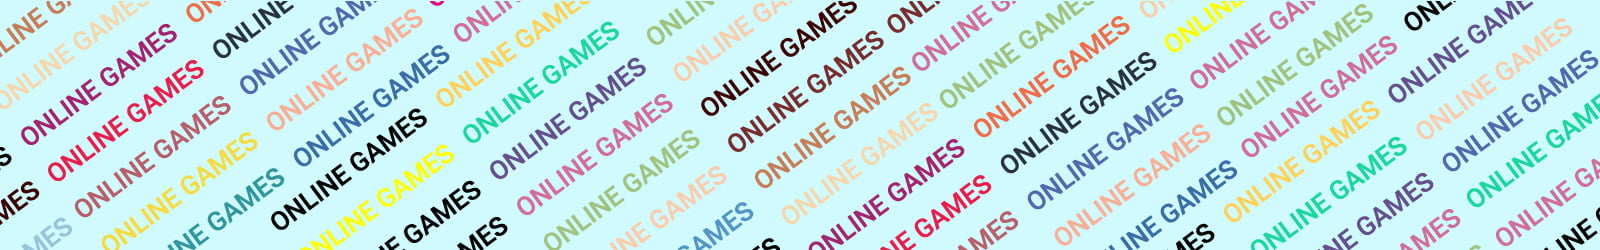 Online Games Banner